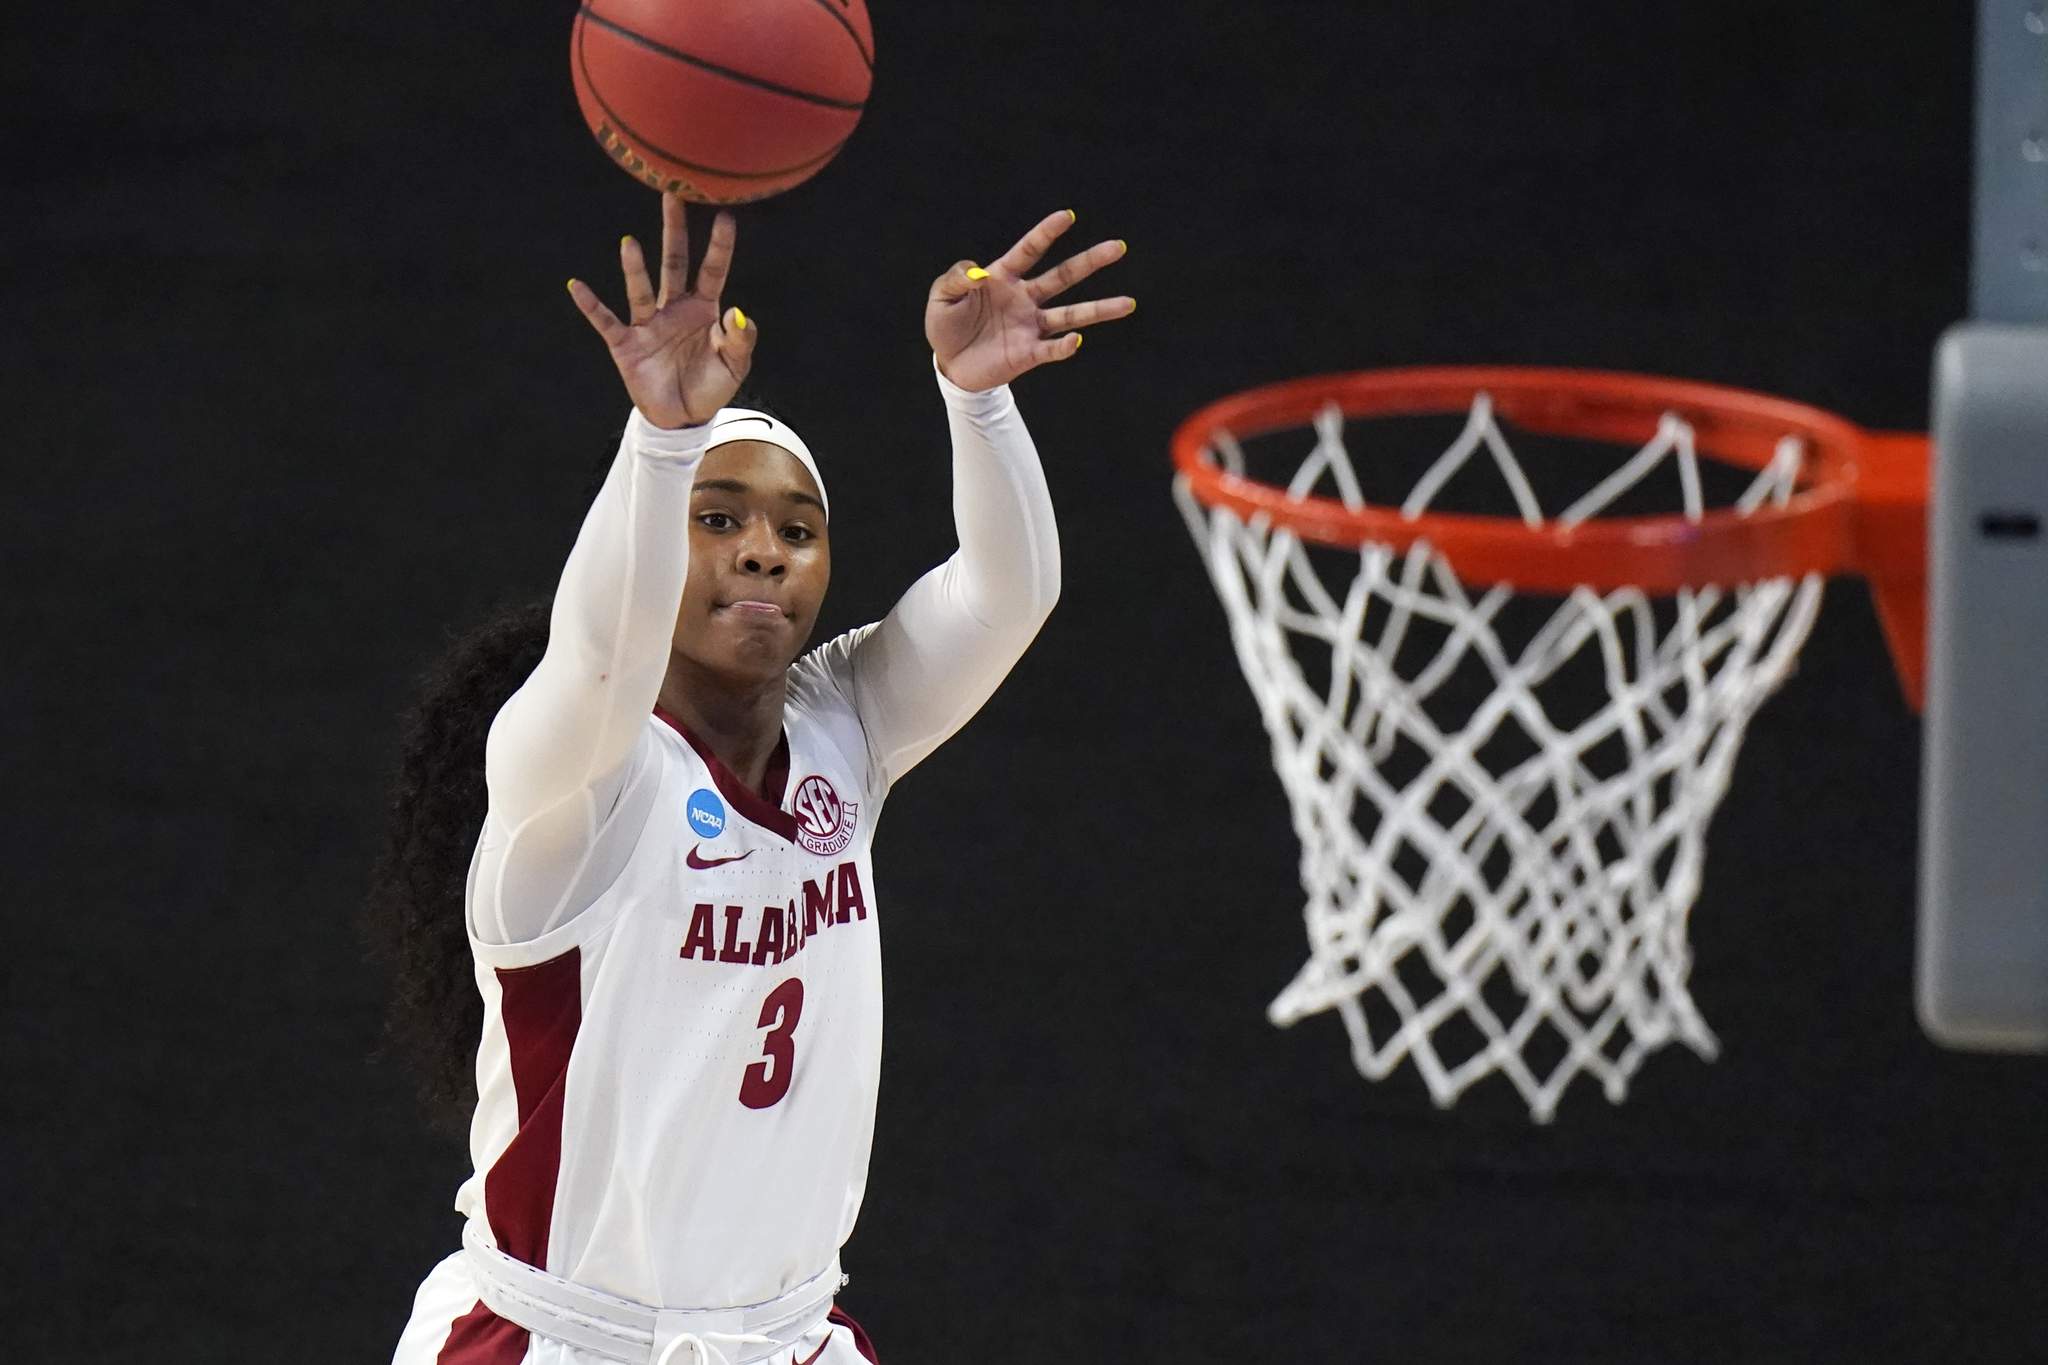 Lewis, Alabama women win in return to NCAA tourney, top UNC